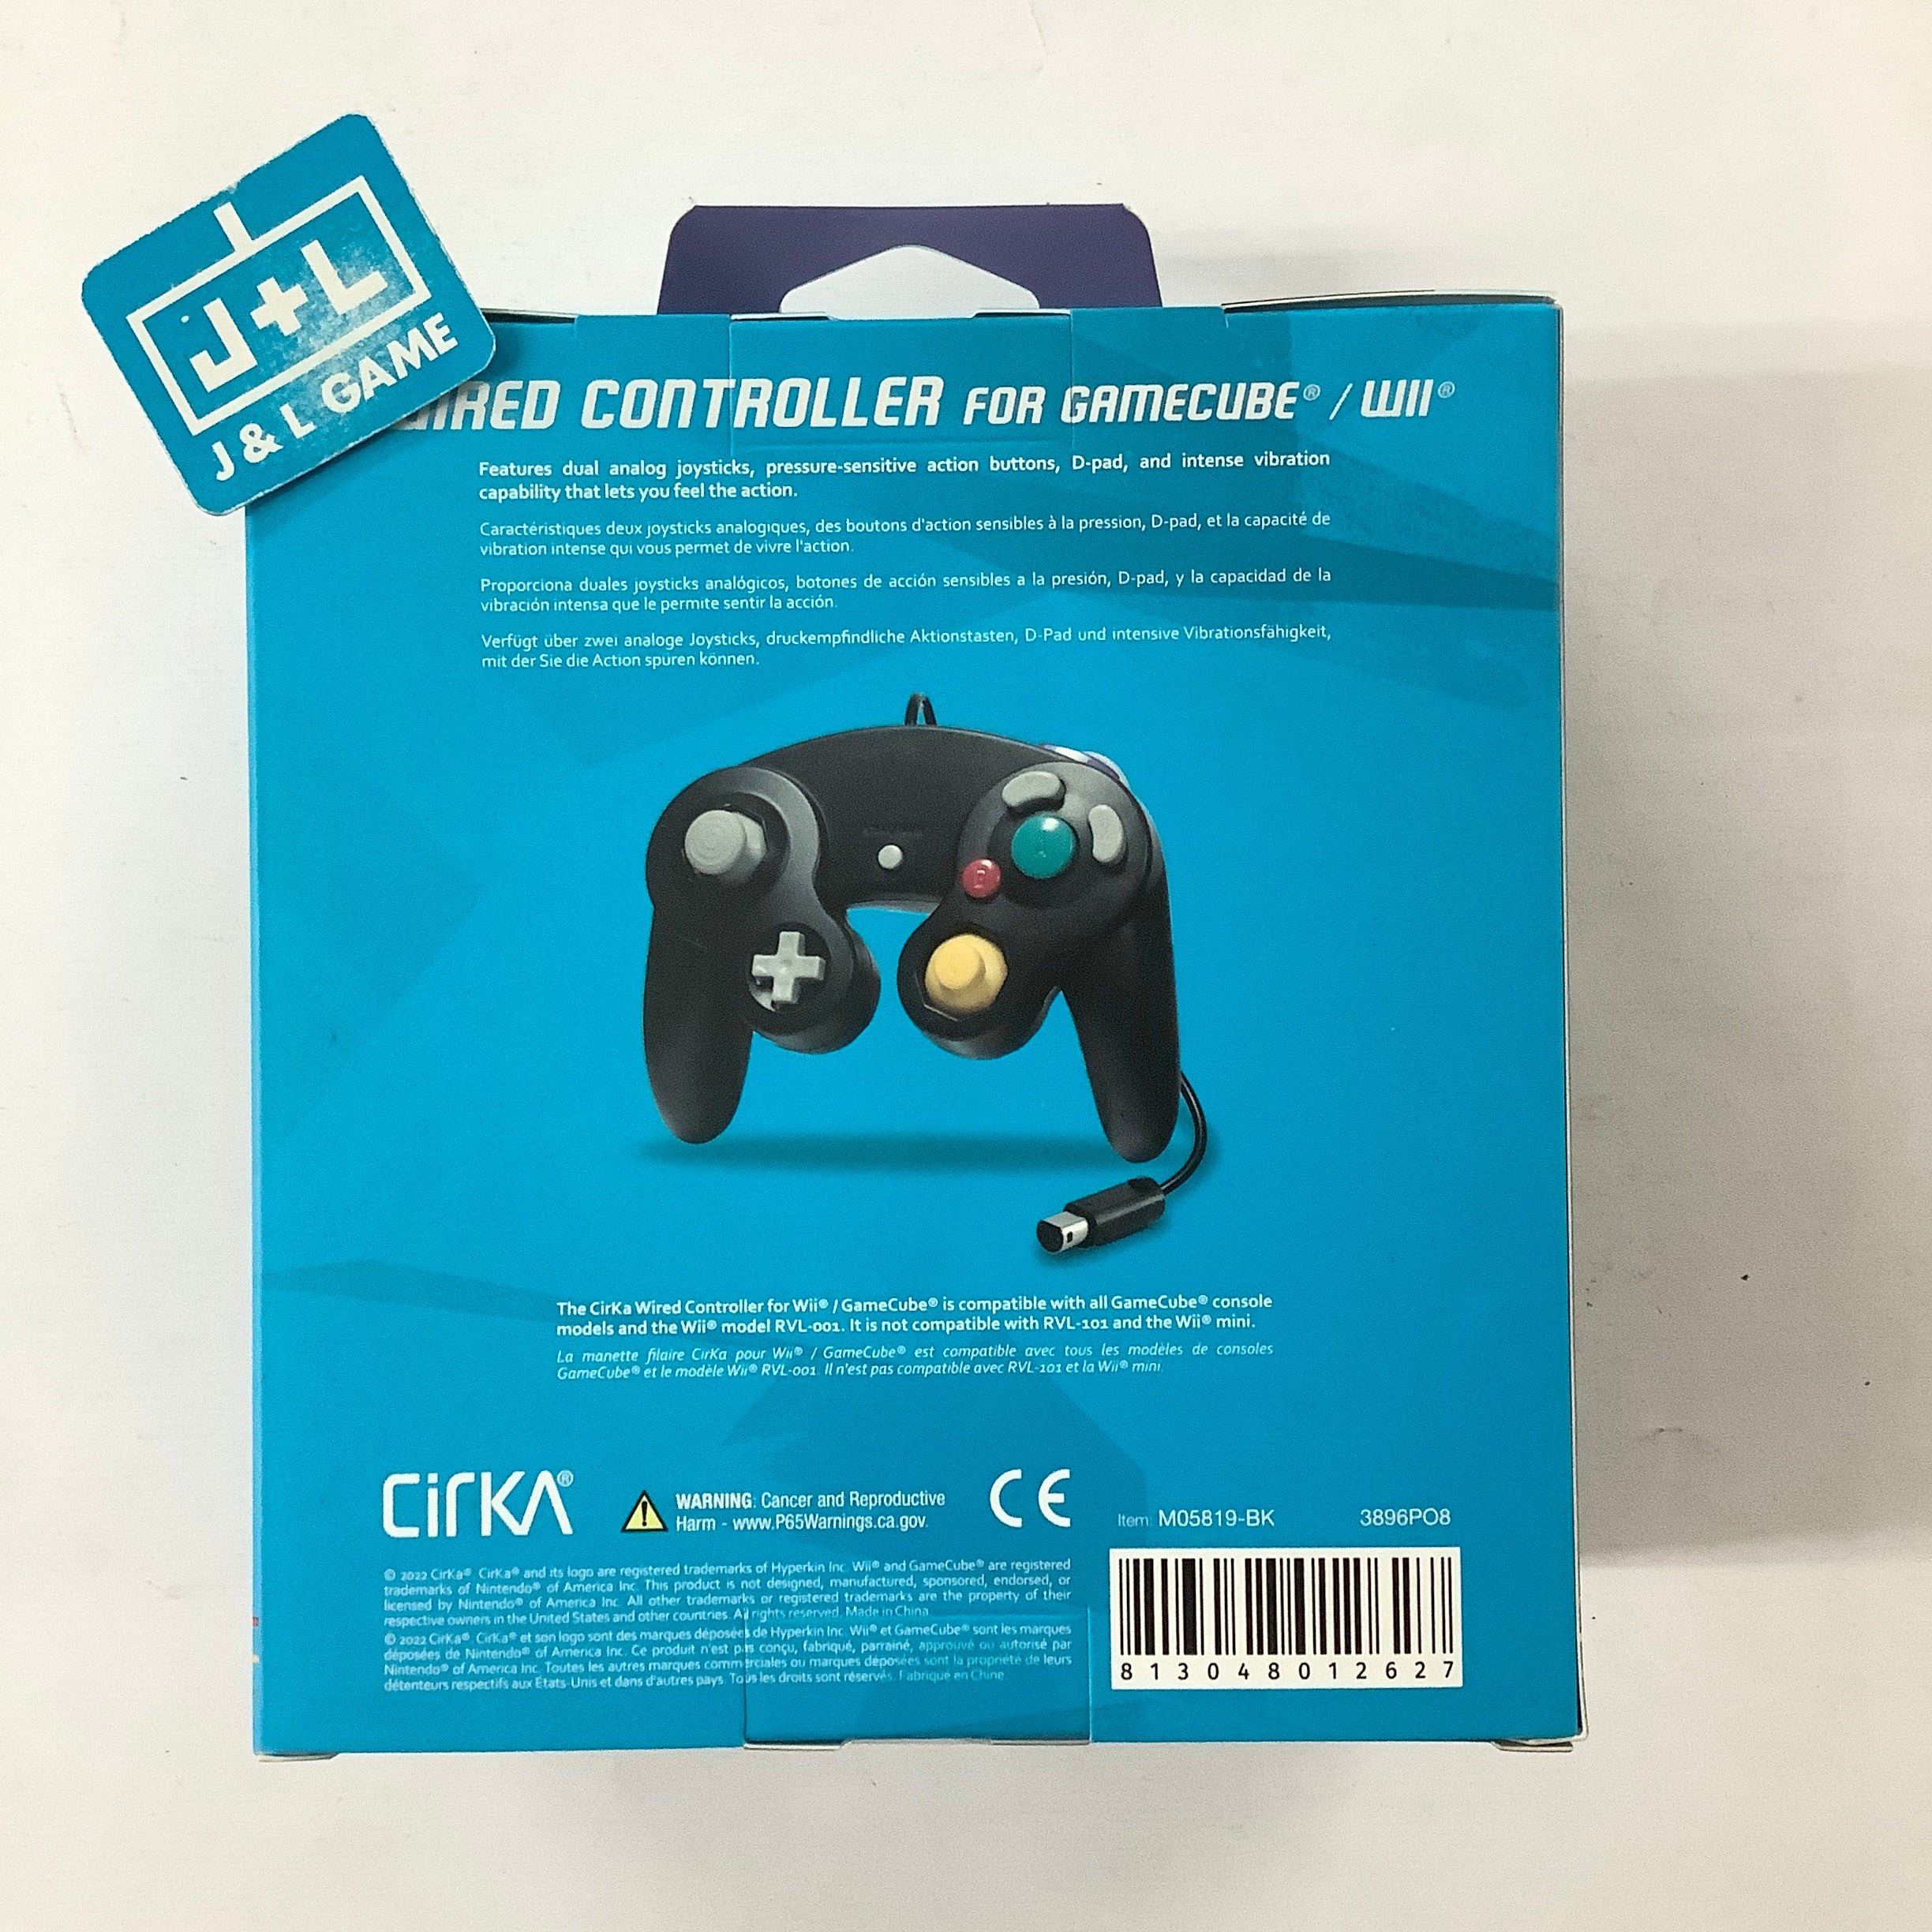 CirKa GameCube/Wii Wired Controller (Black) - (GC) GameCube Accessories Cirka   